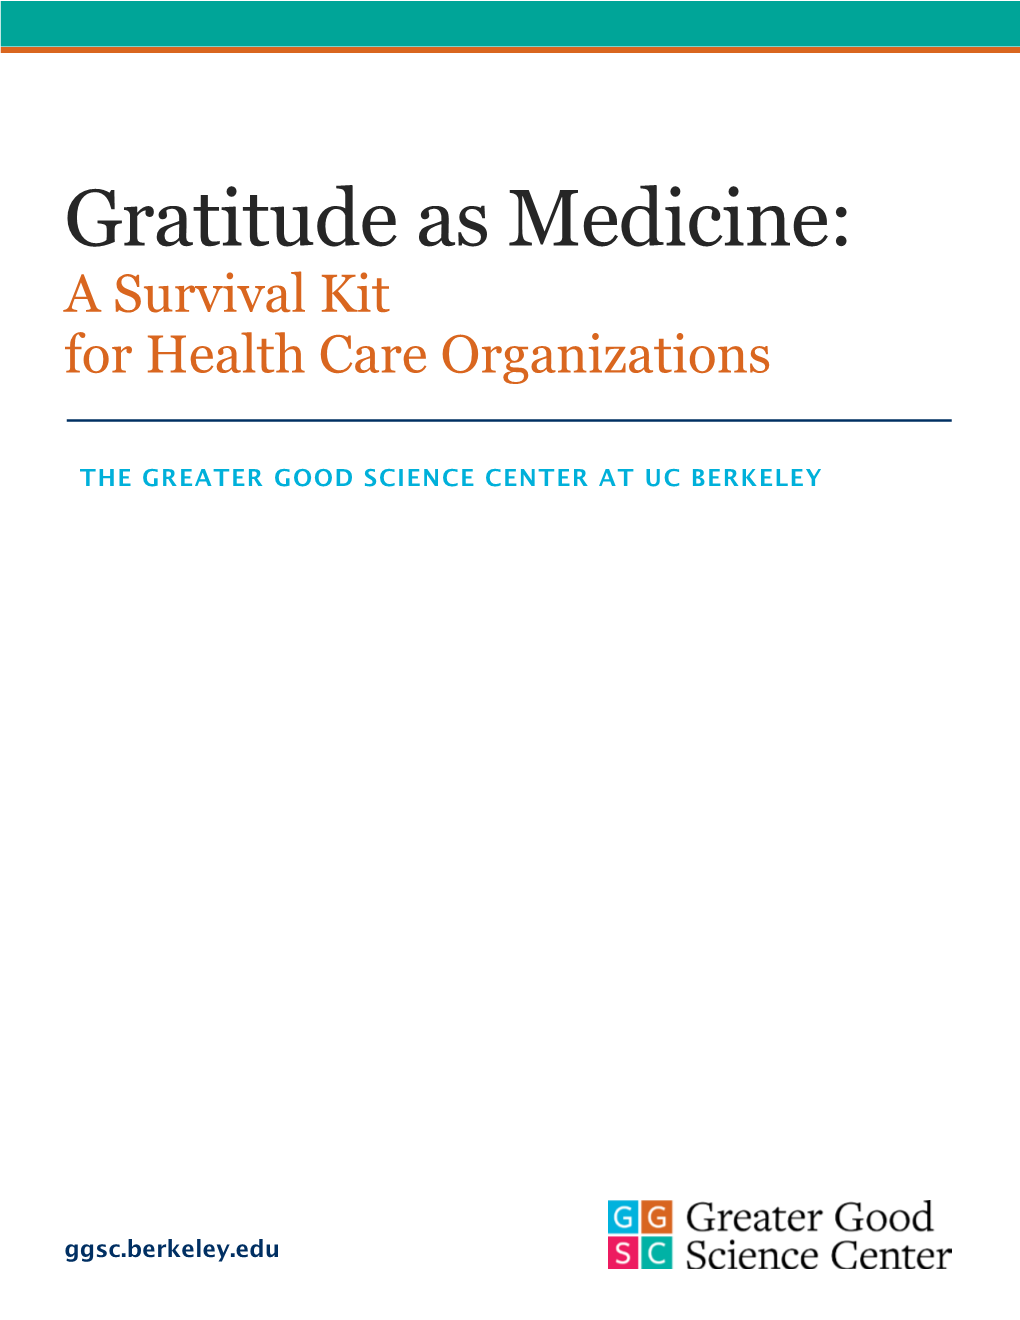 Gratitude As Medicine: a Survival Kit for Health Care Organizations